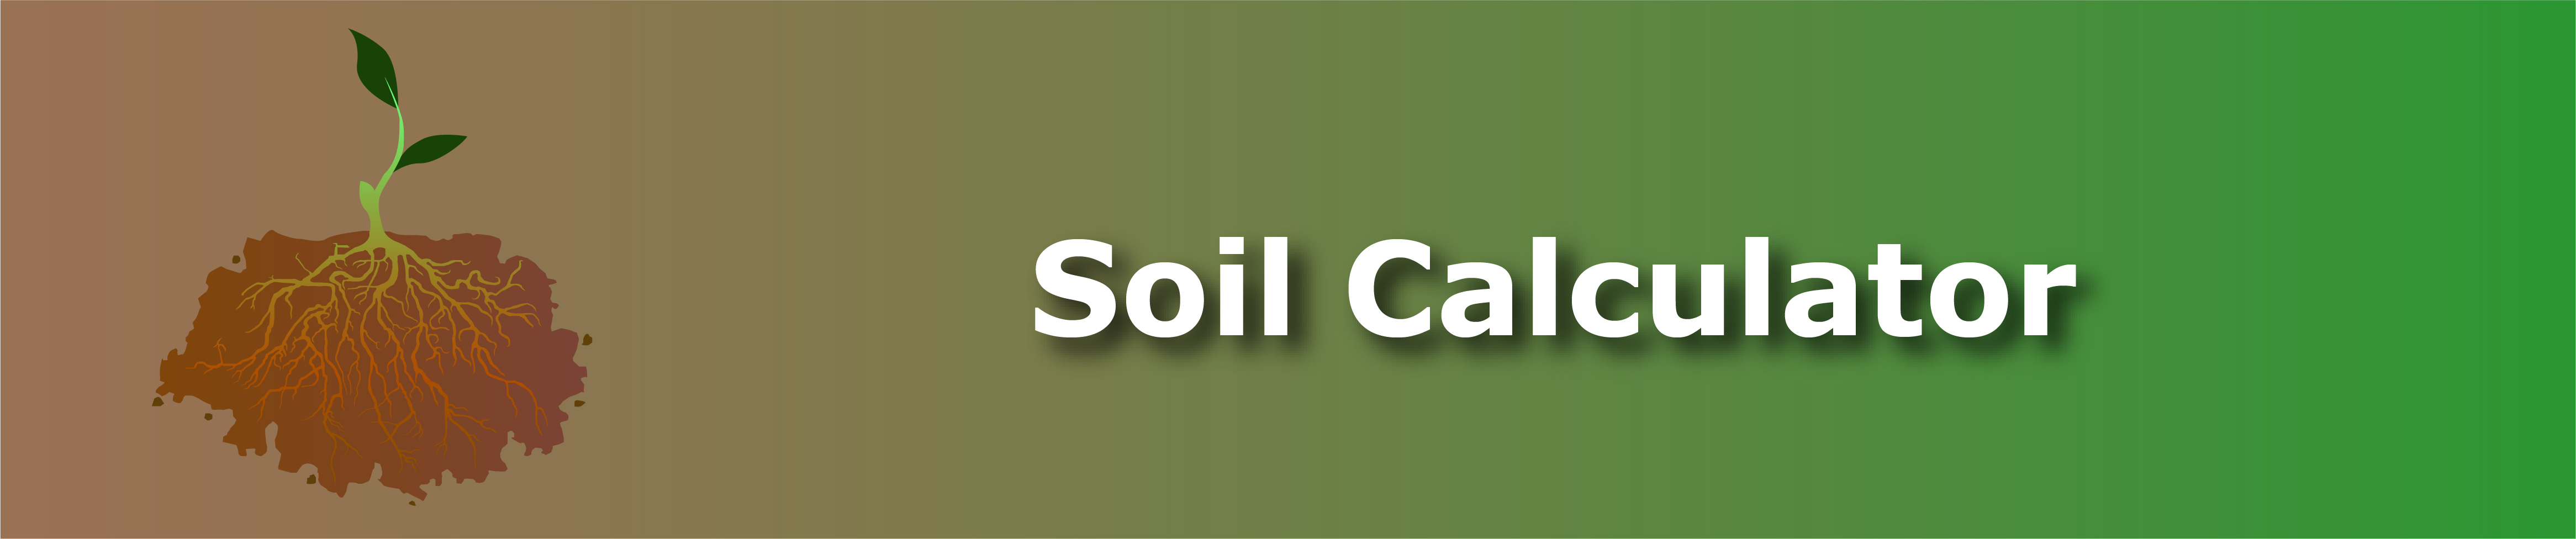 Soil Calculator